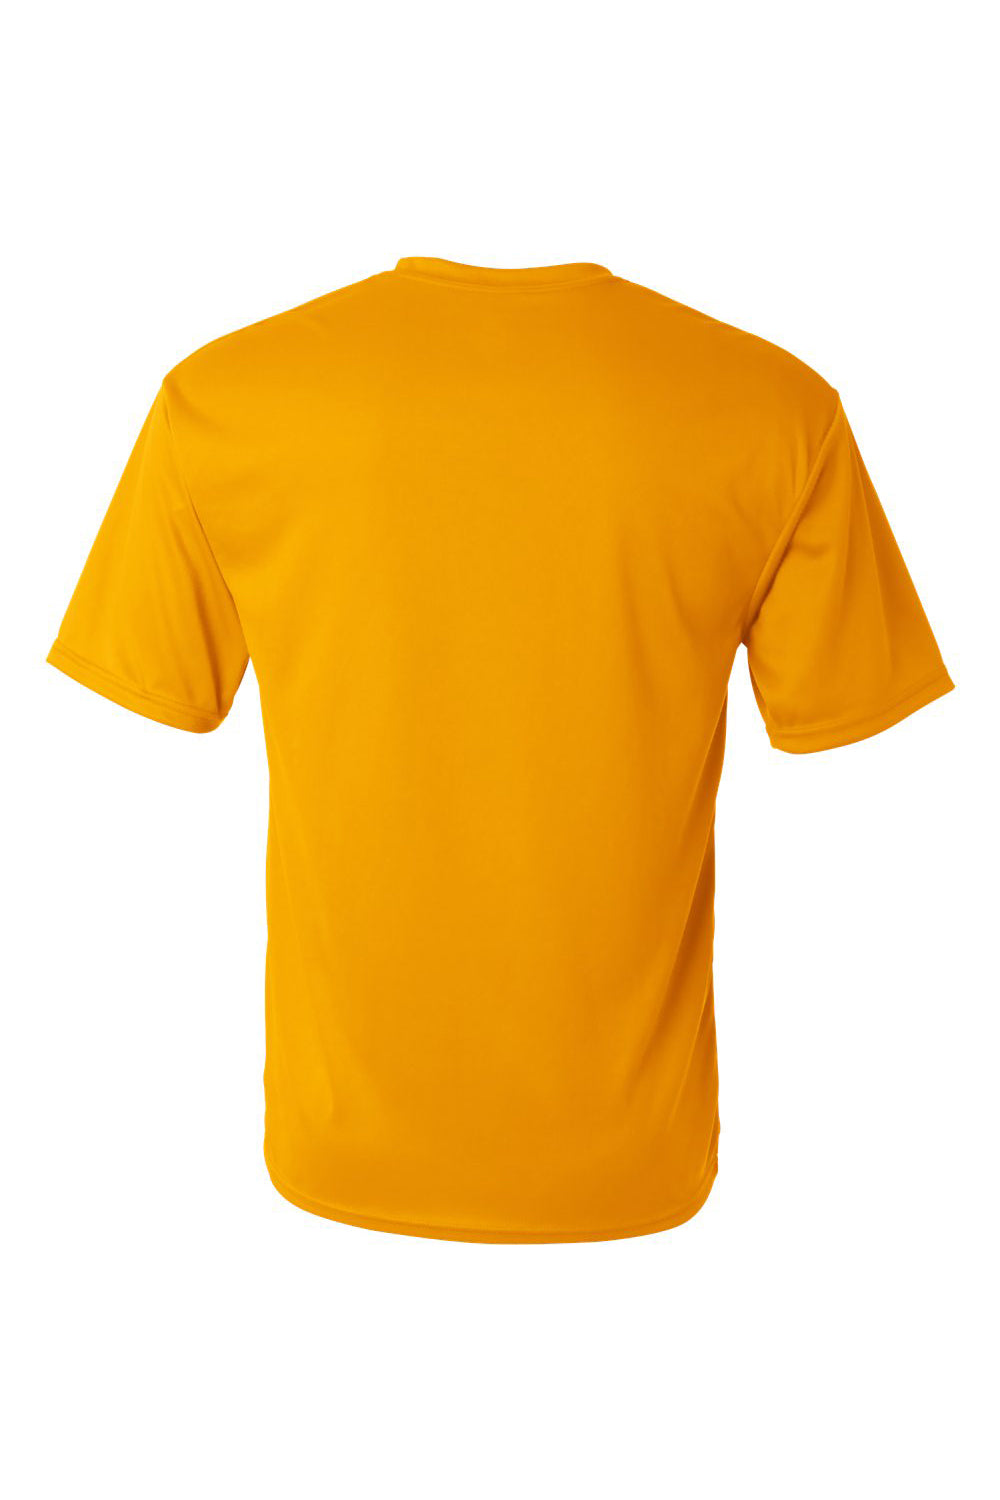 C2 Sport 5100 Mens Performance Moisture Wicking Short Sleeve Crewneck T-Shirt Gold Flat Back